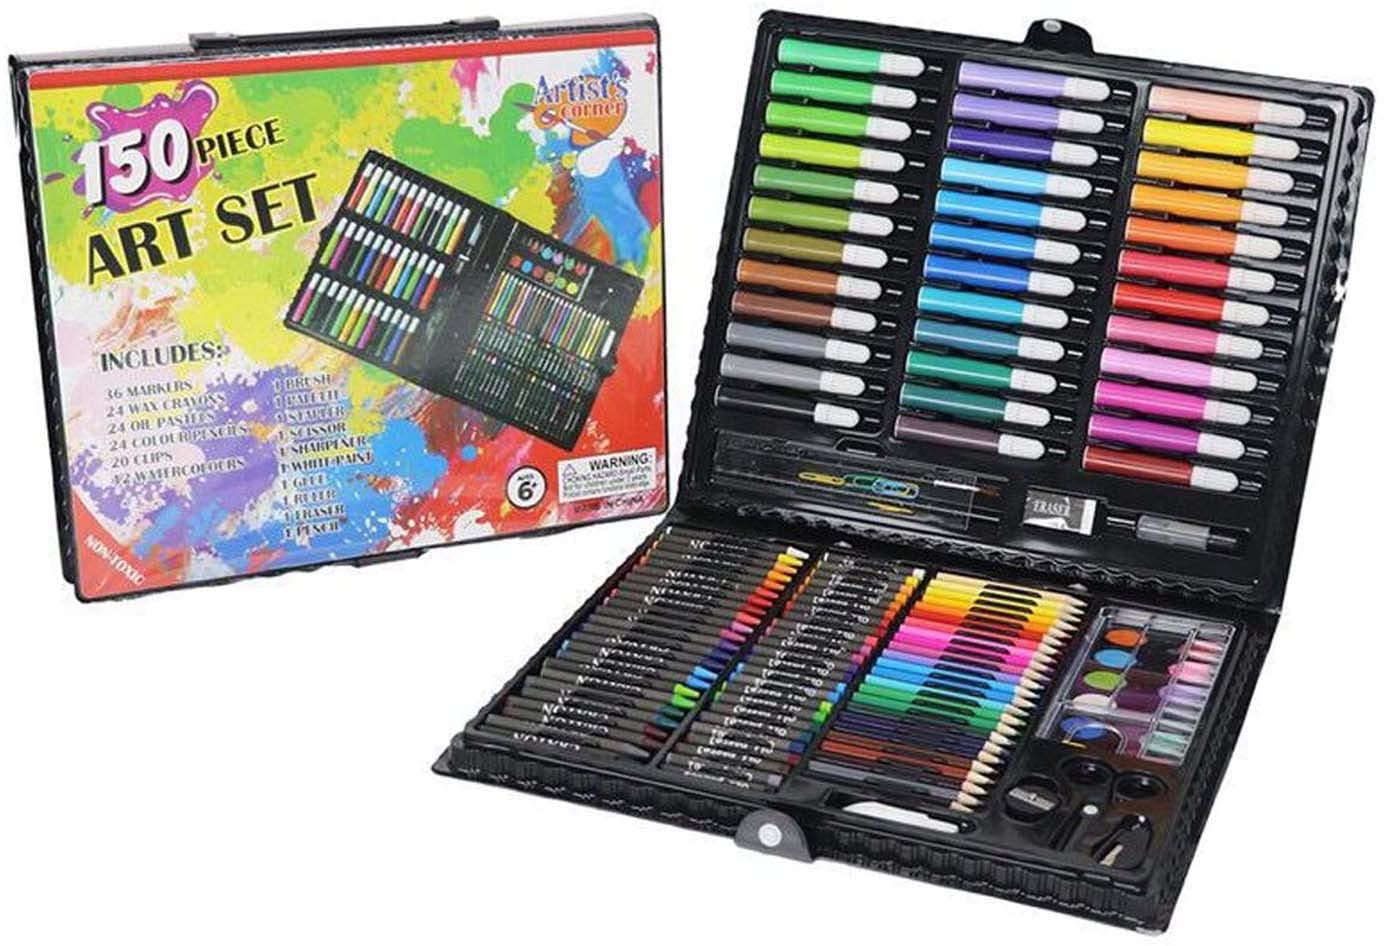 GoXteam Art Set, 150 PCS Art Supplies, Coloring Drawing Painting